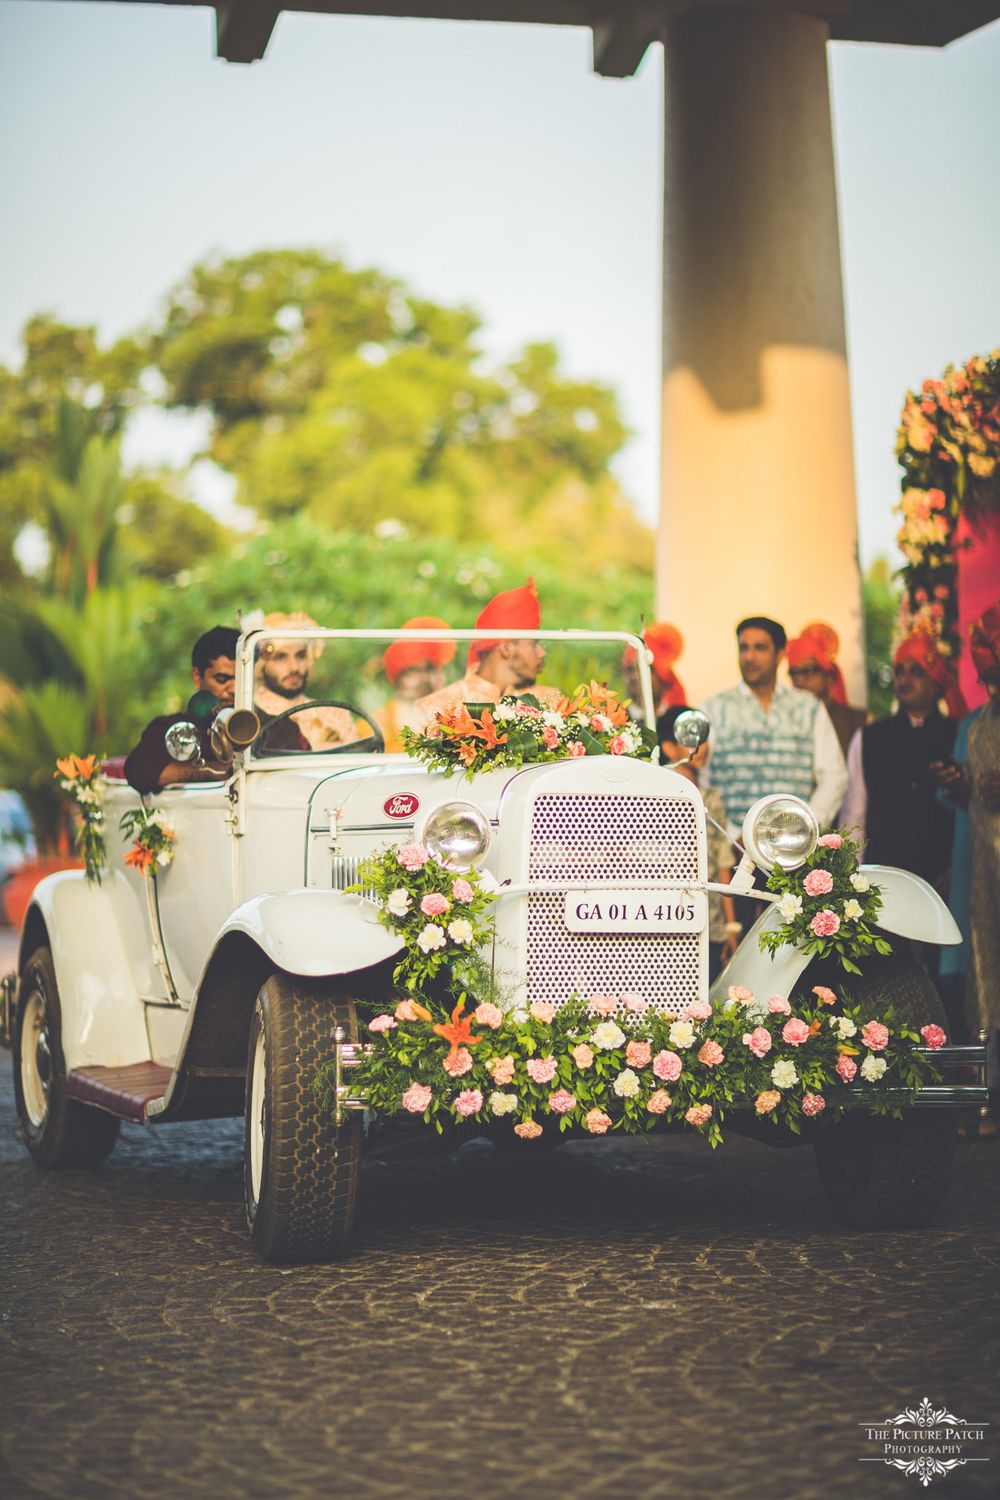 Photo of Groom entering his wedding in a vintage car